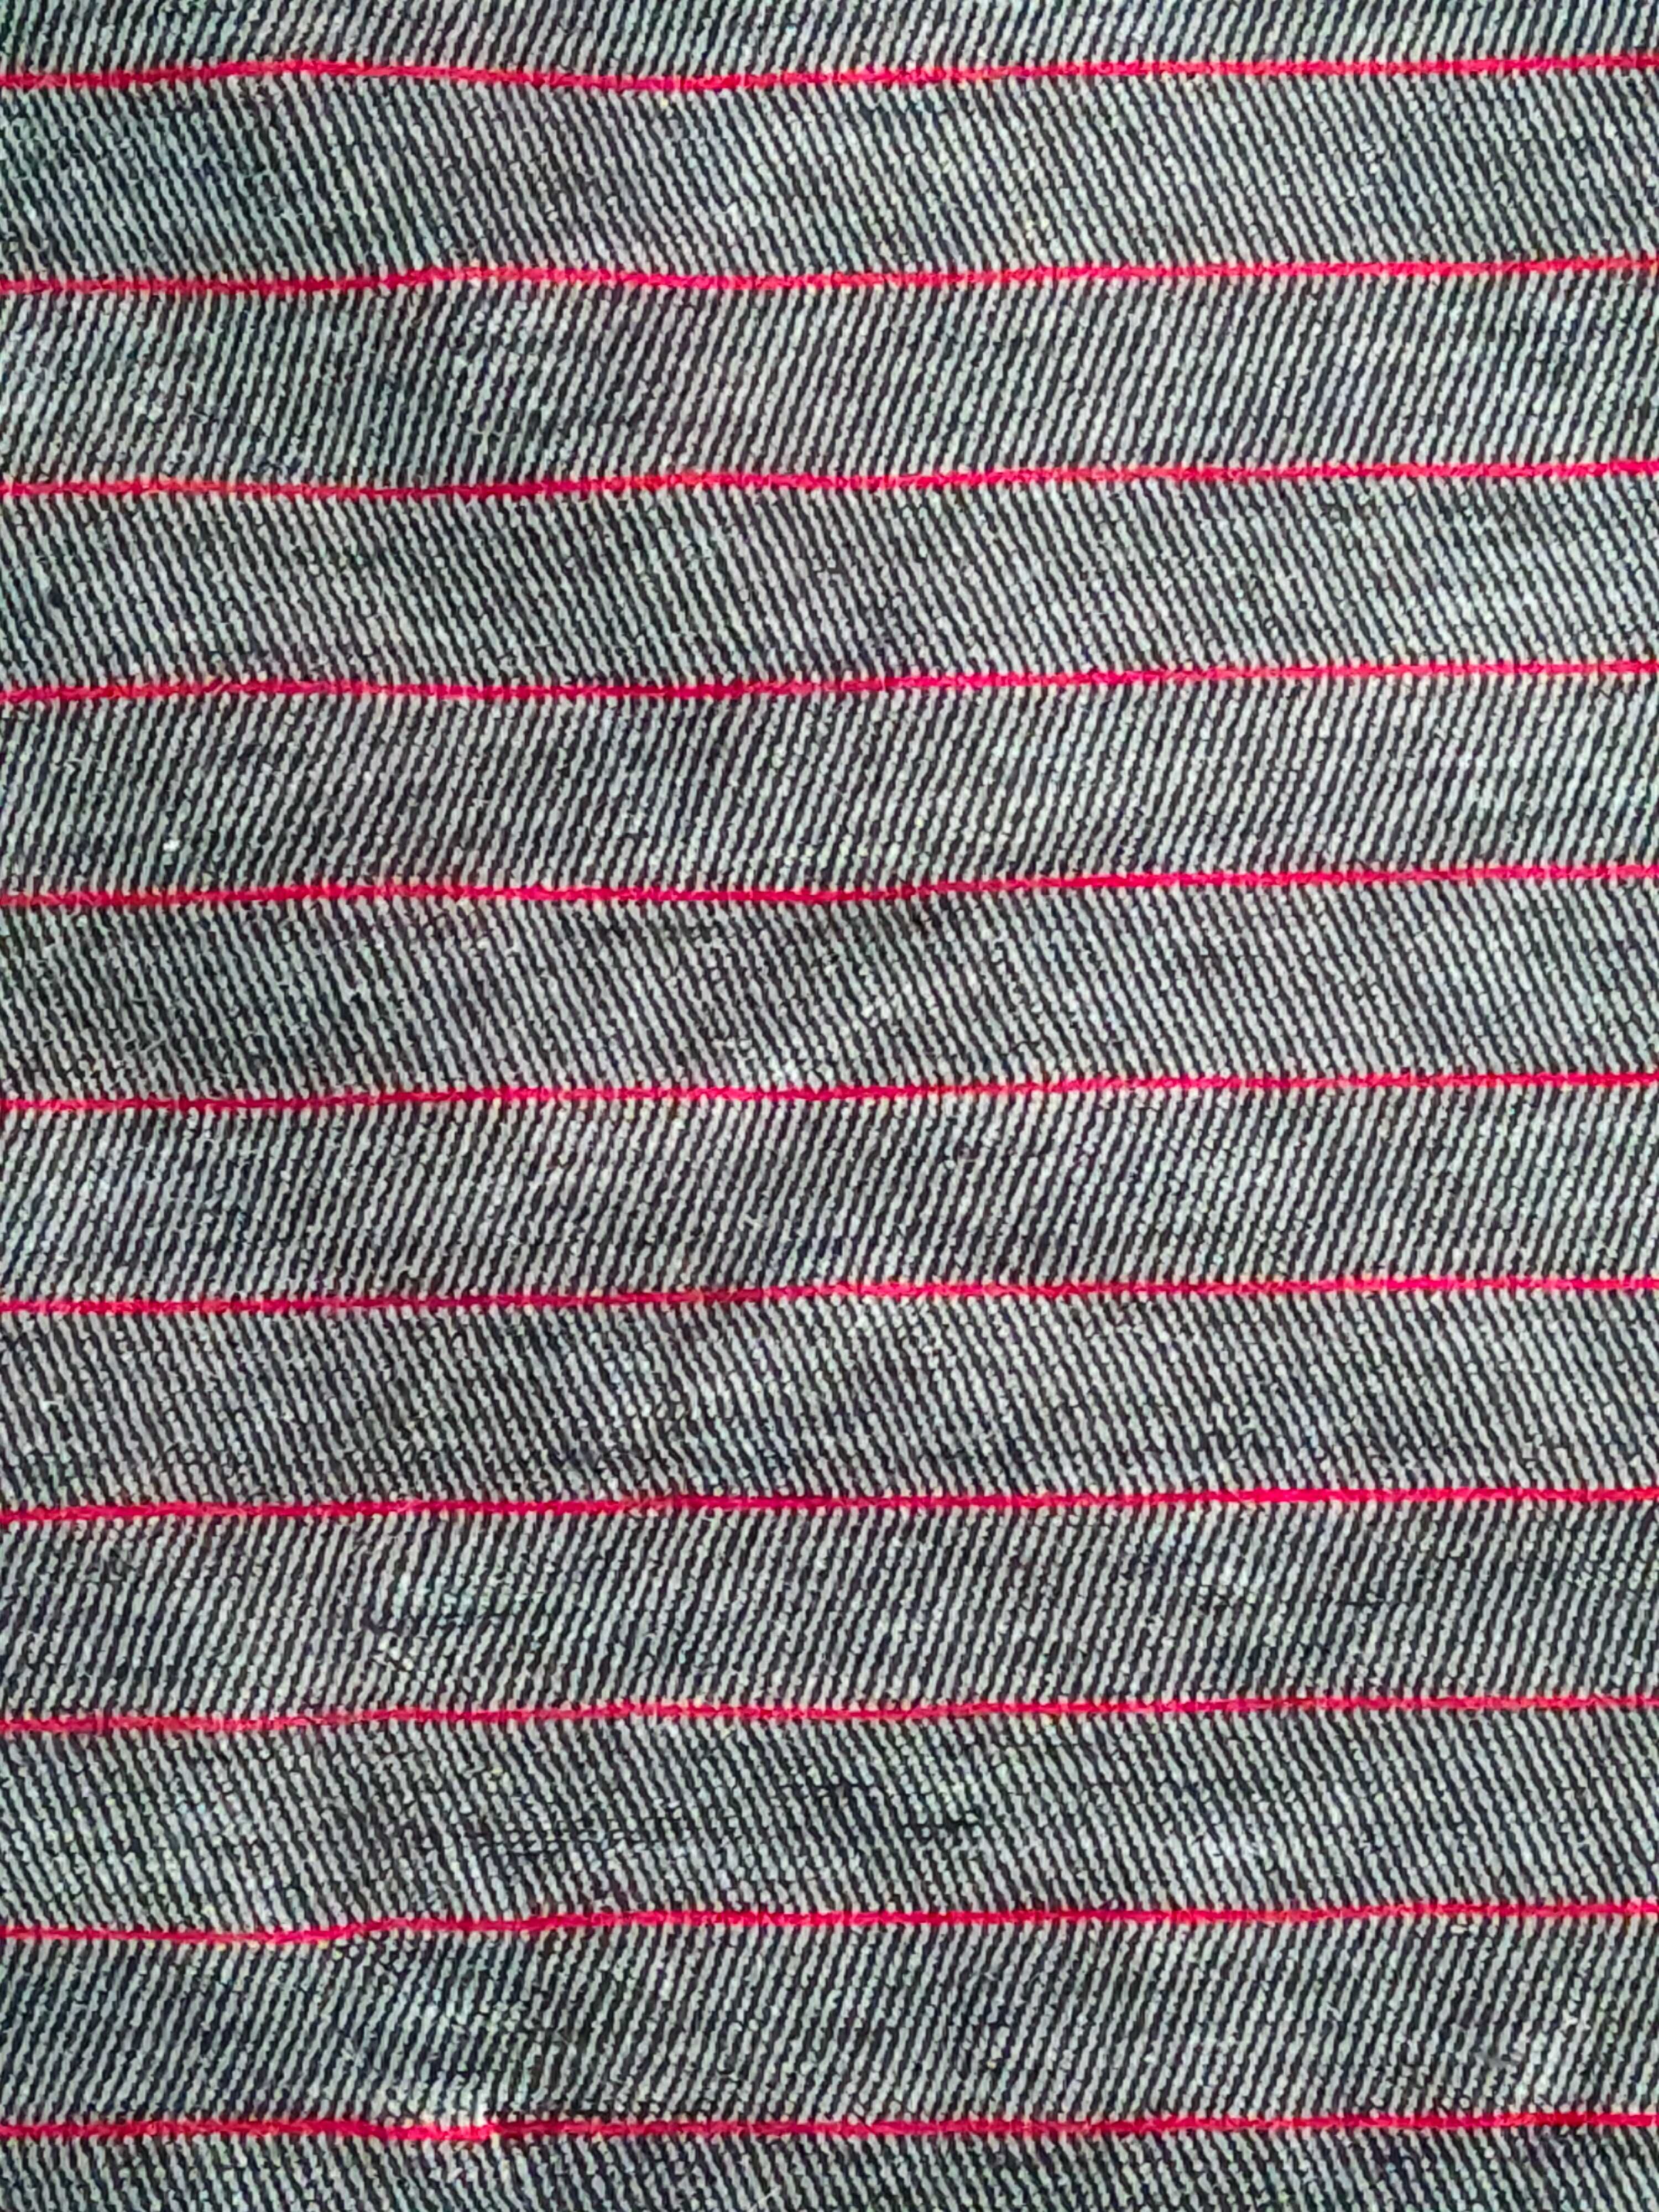 Tkanina tapicerska, meblowa / materiał obiciowy